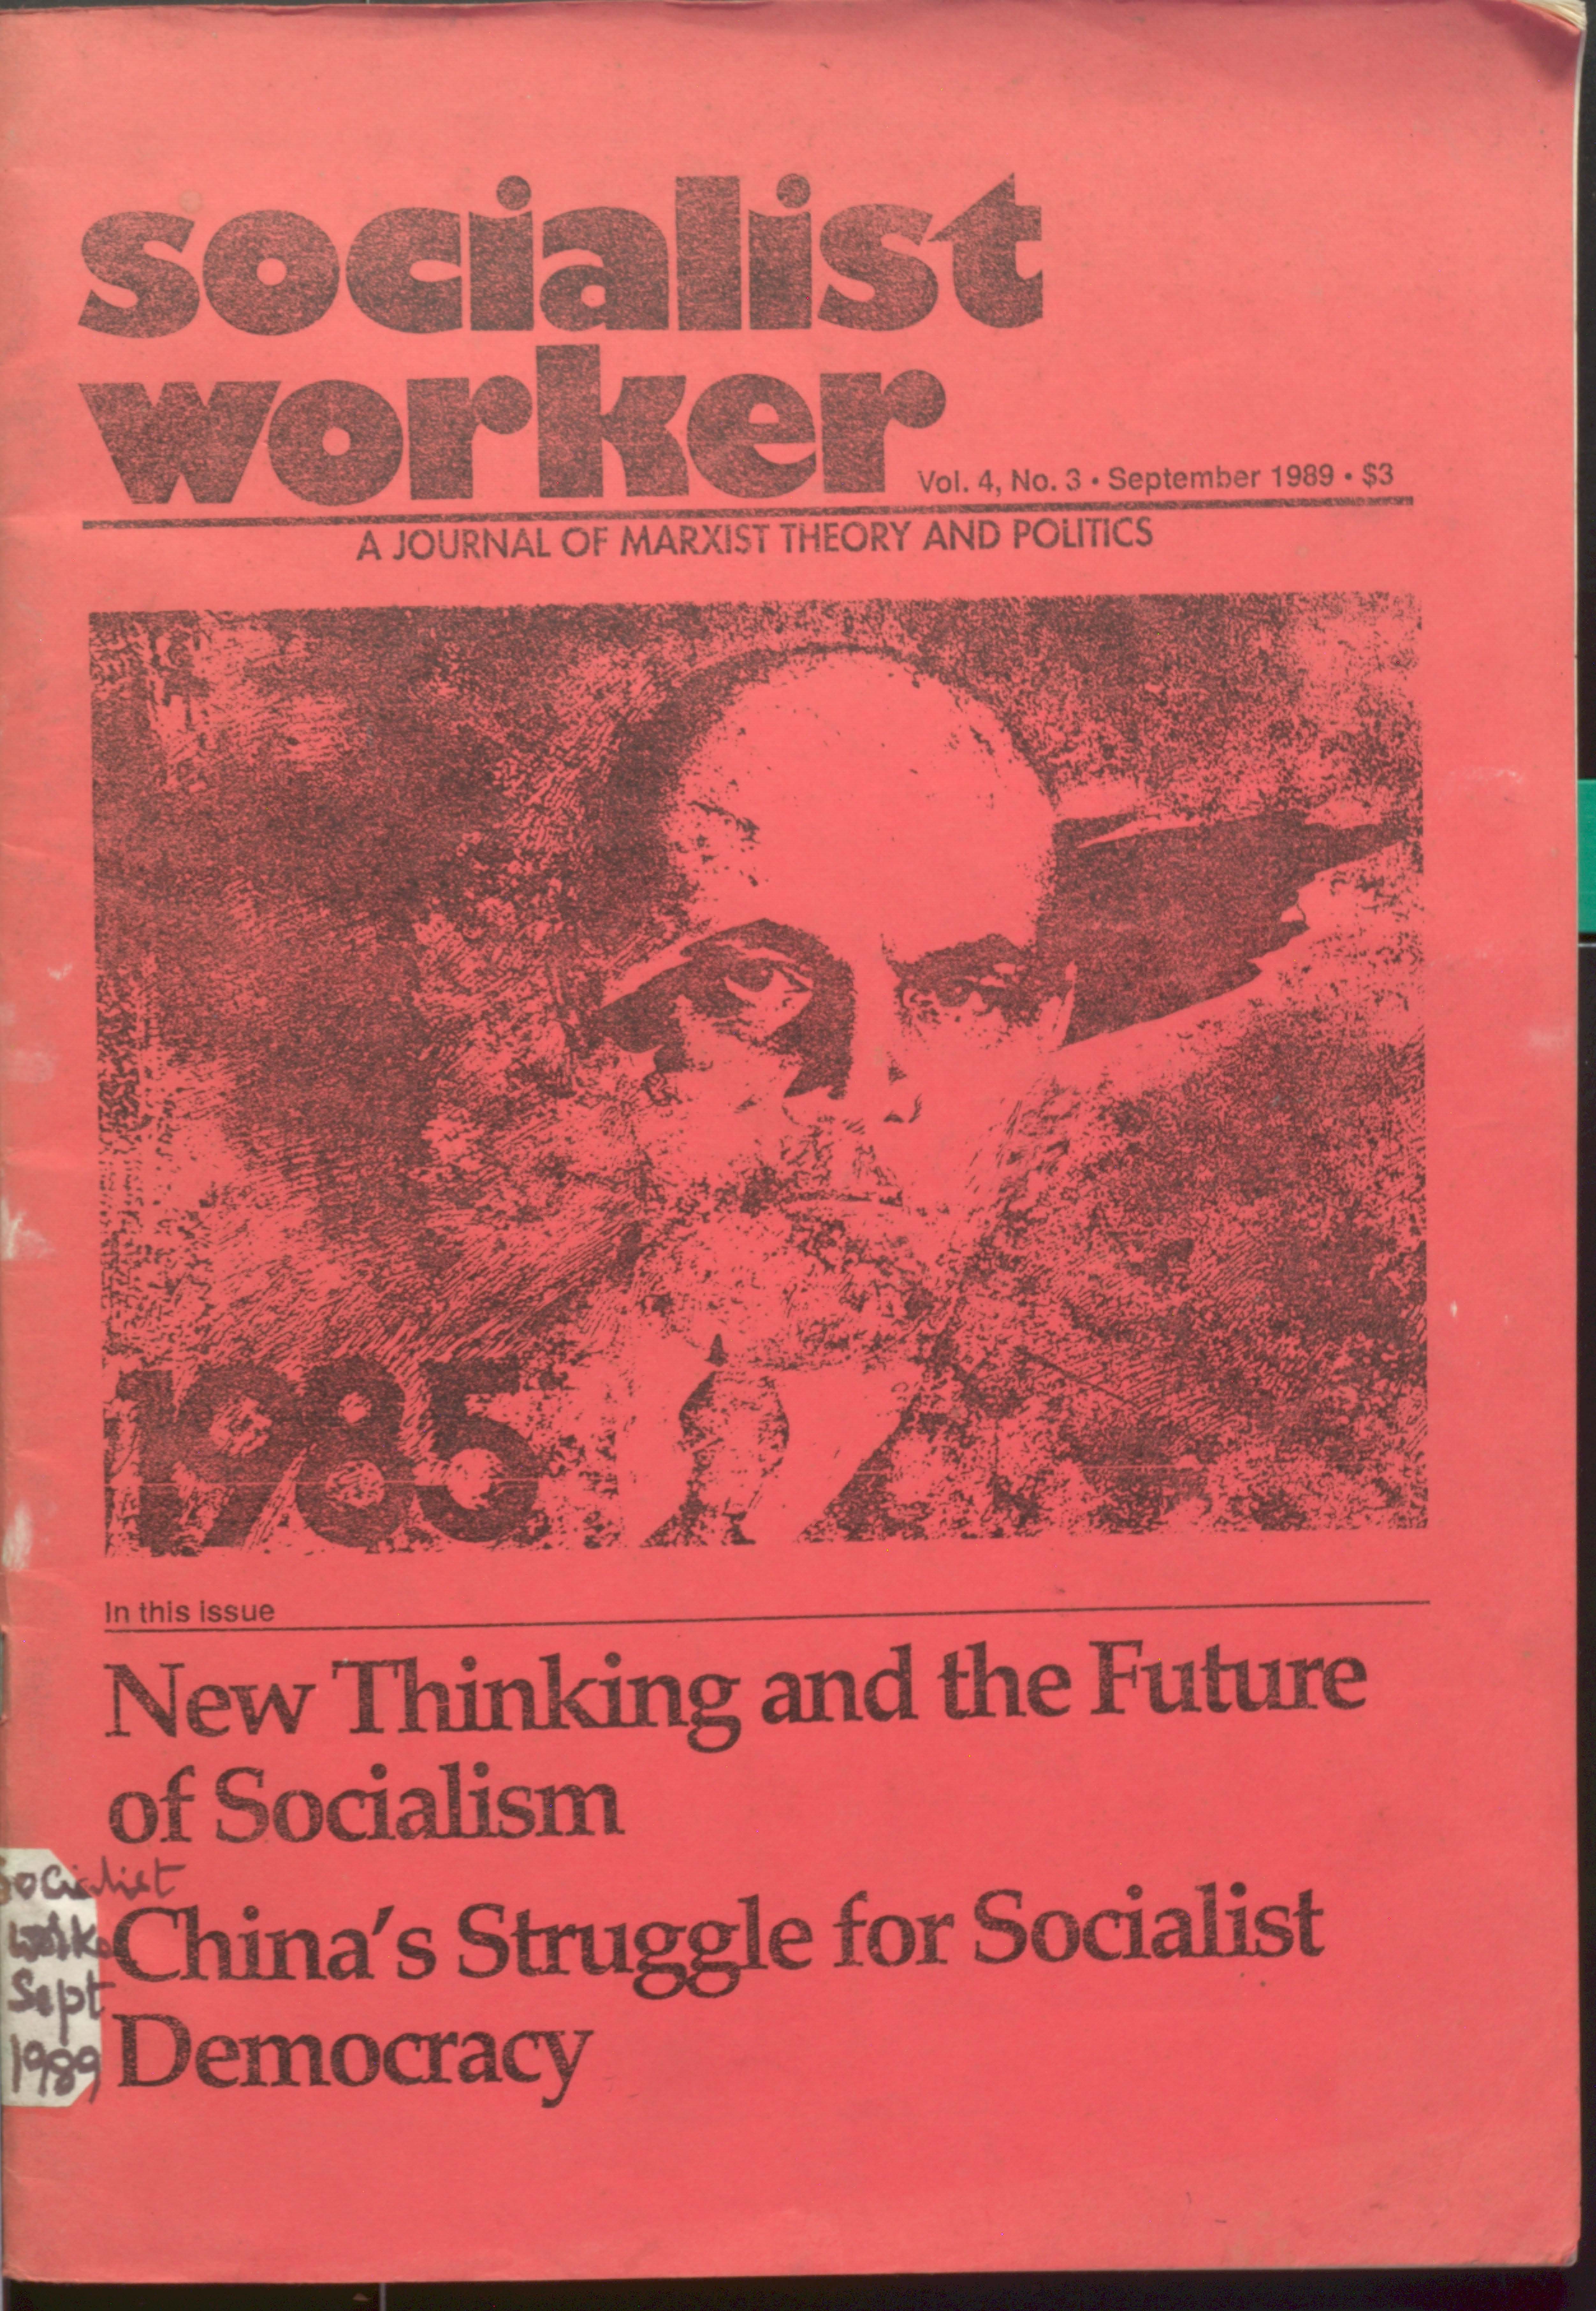 Socialist Worker [V-4,No-3. September1989]